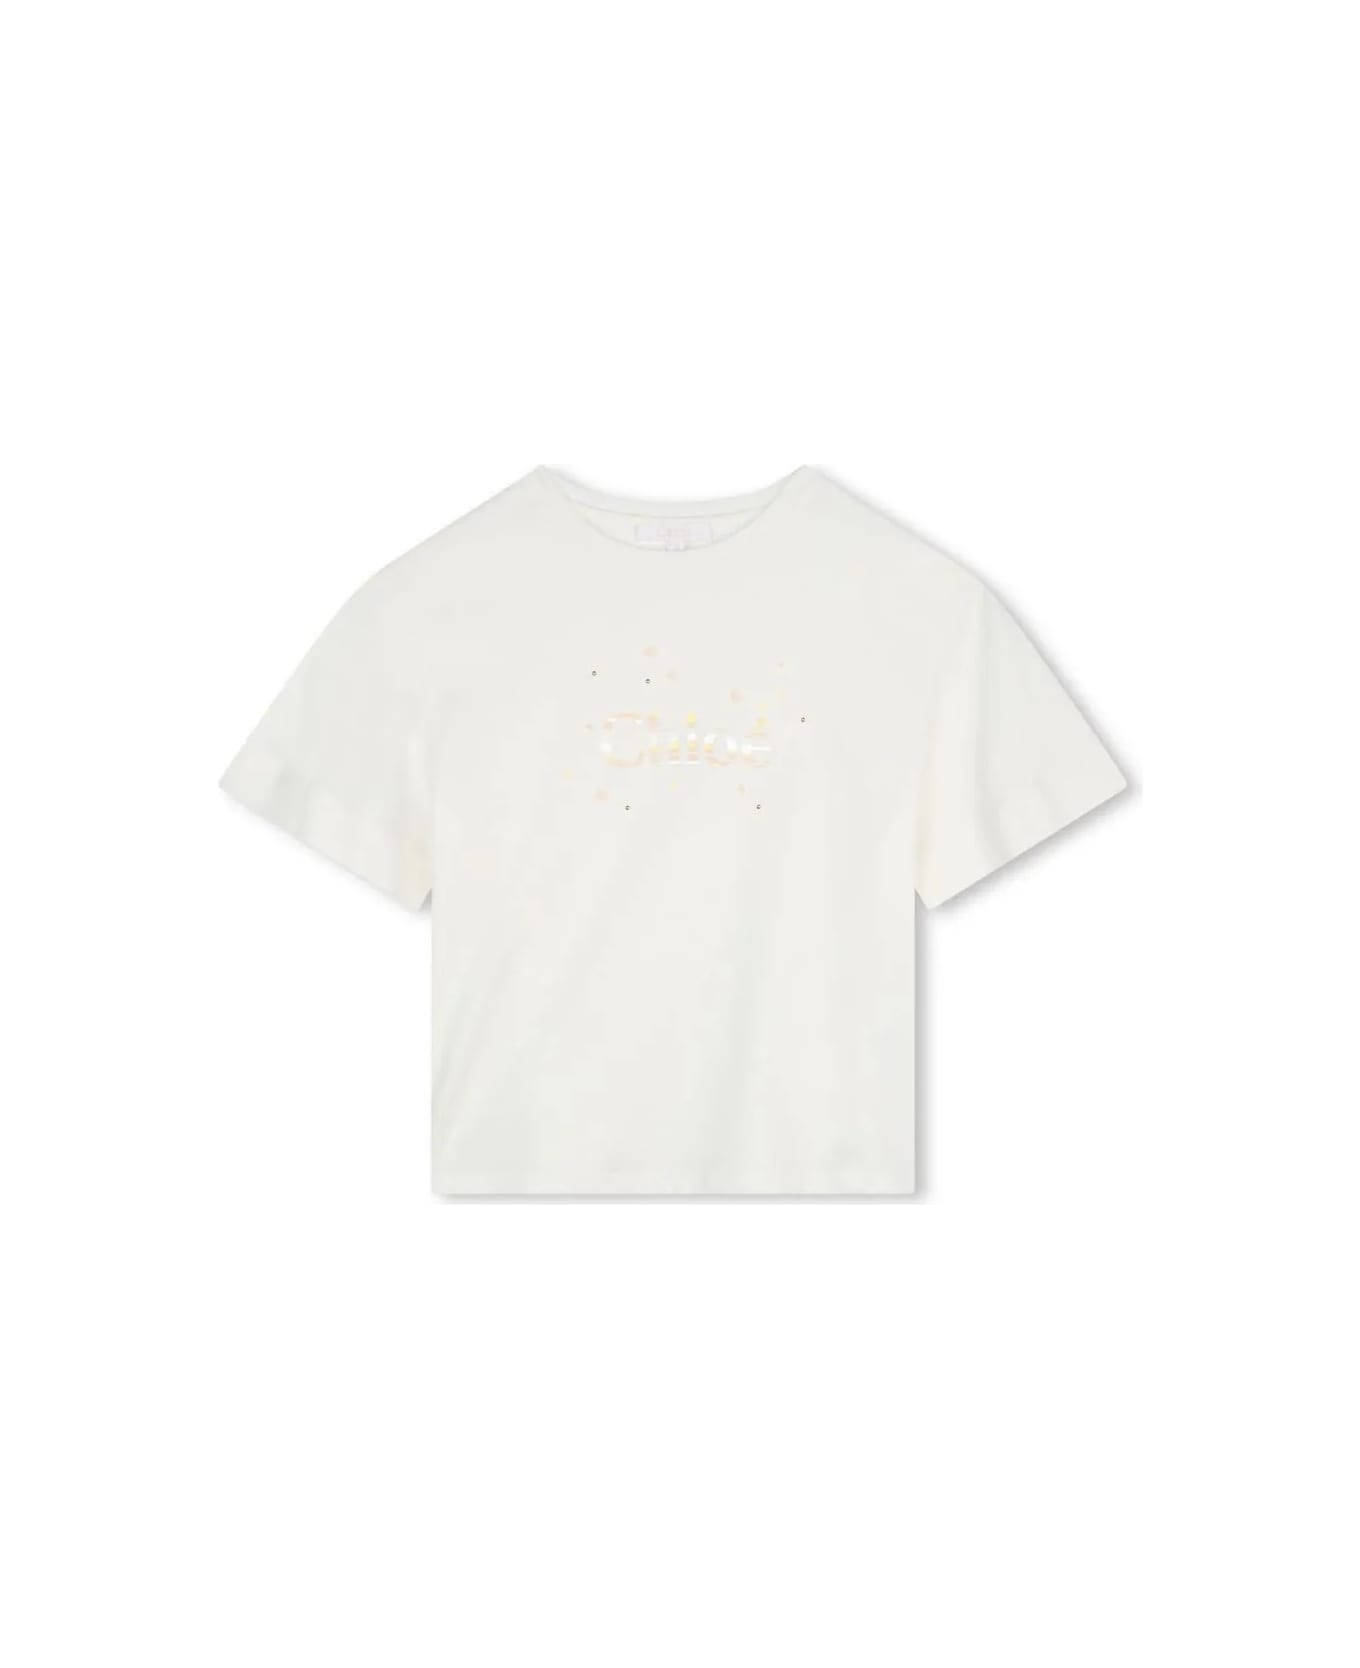 Chloé White T-shirt With Logo And Stars Print - White